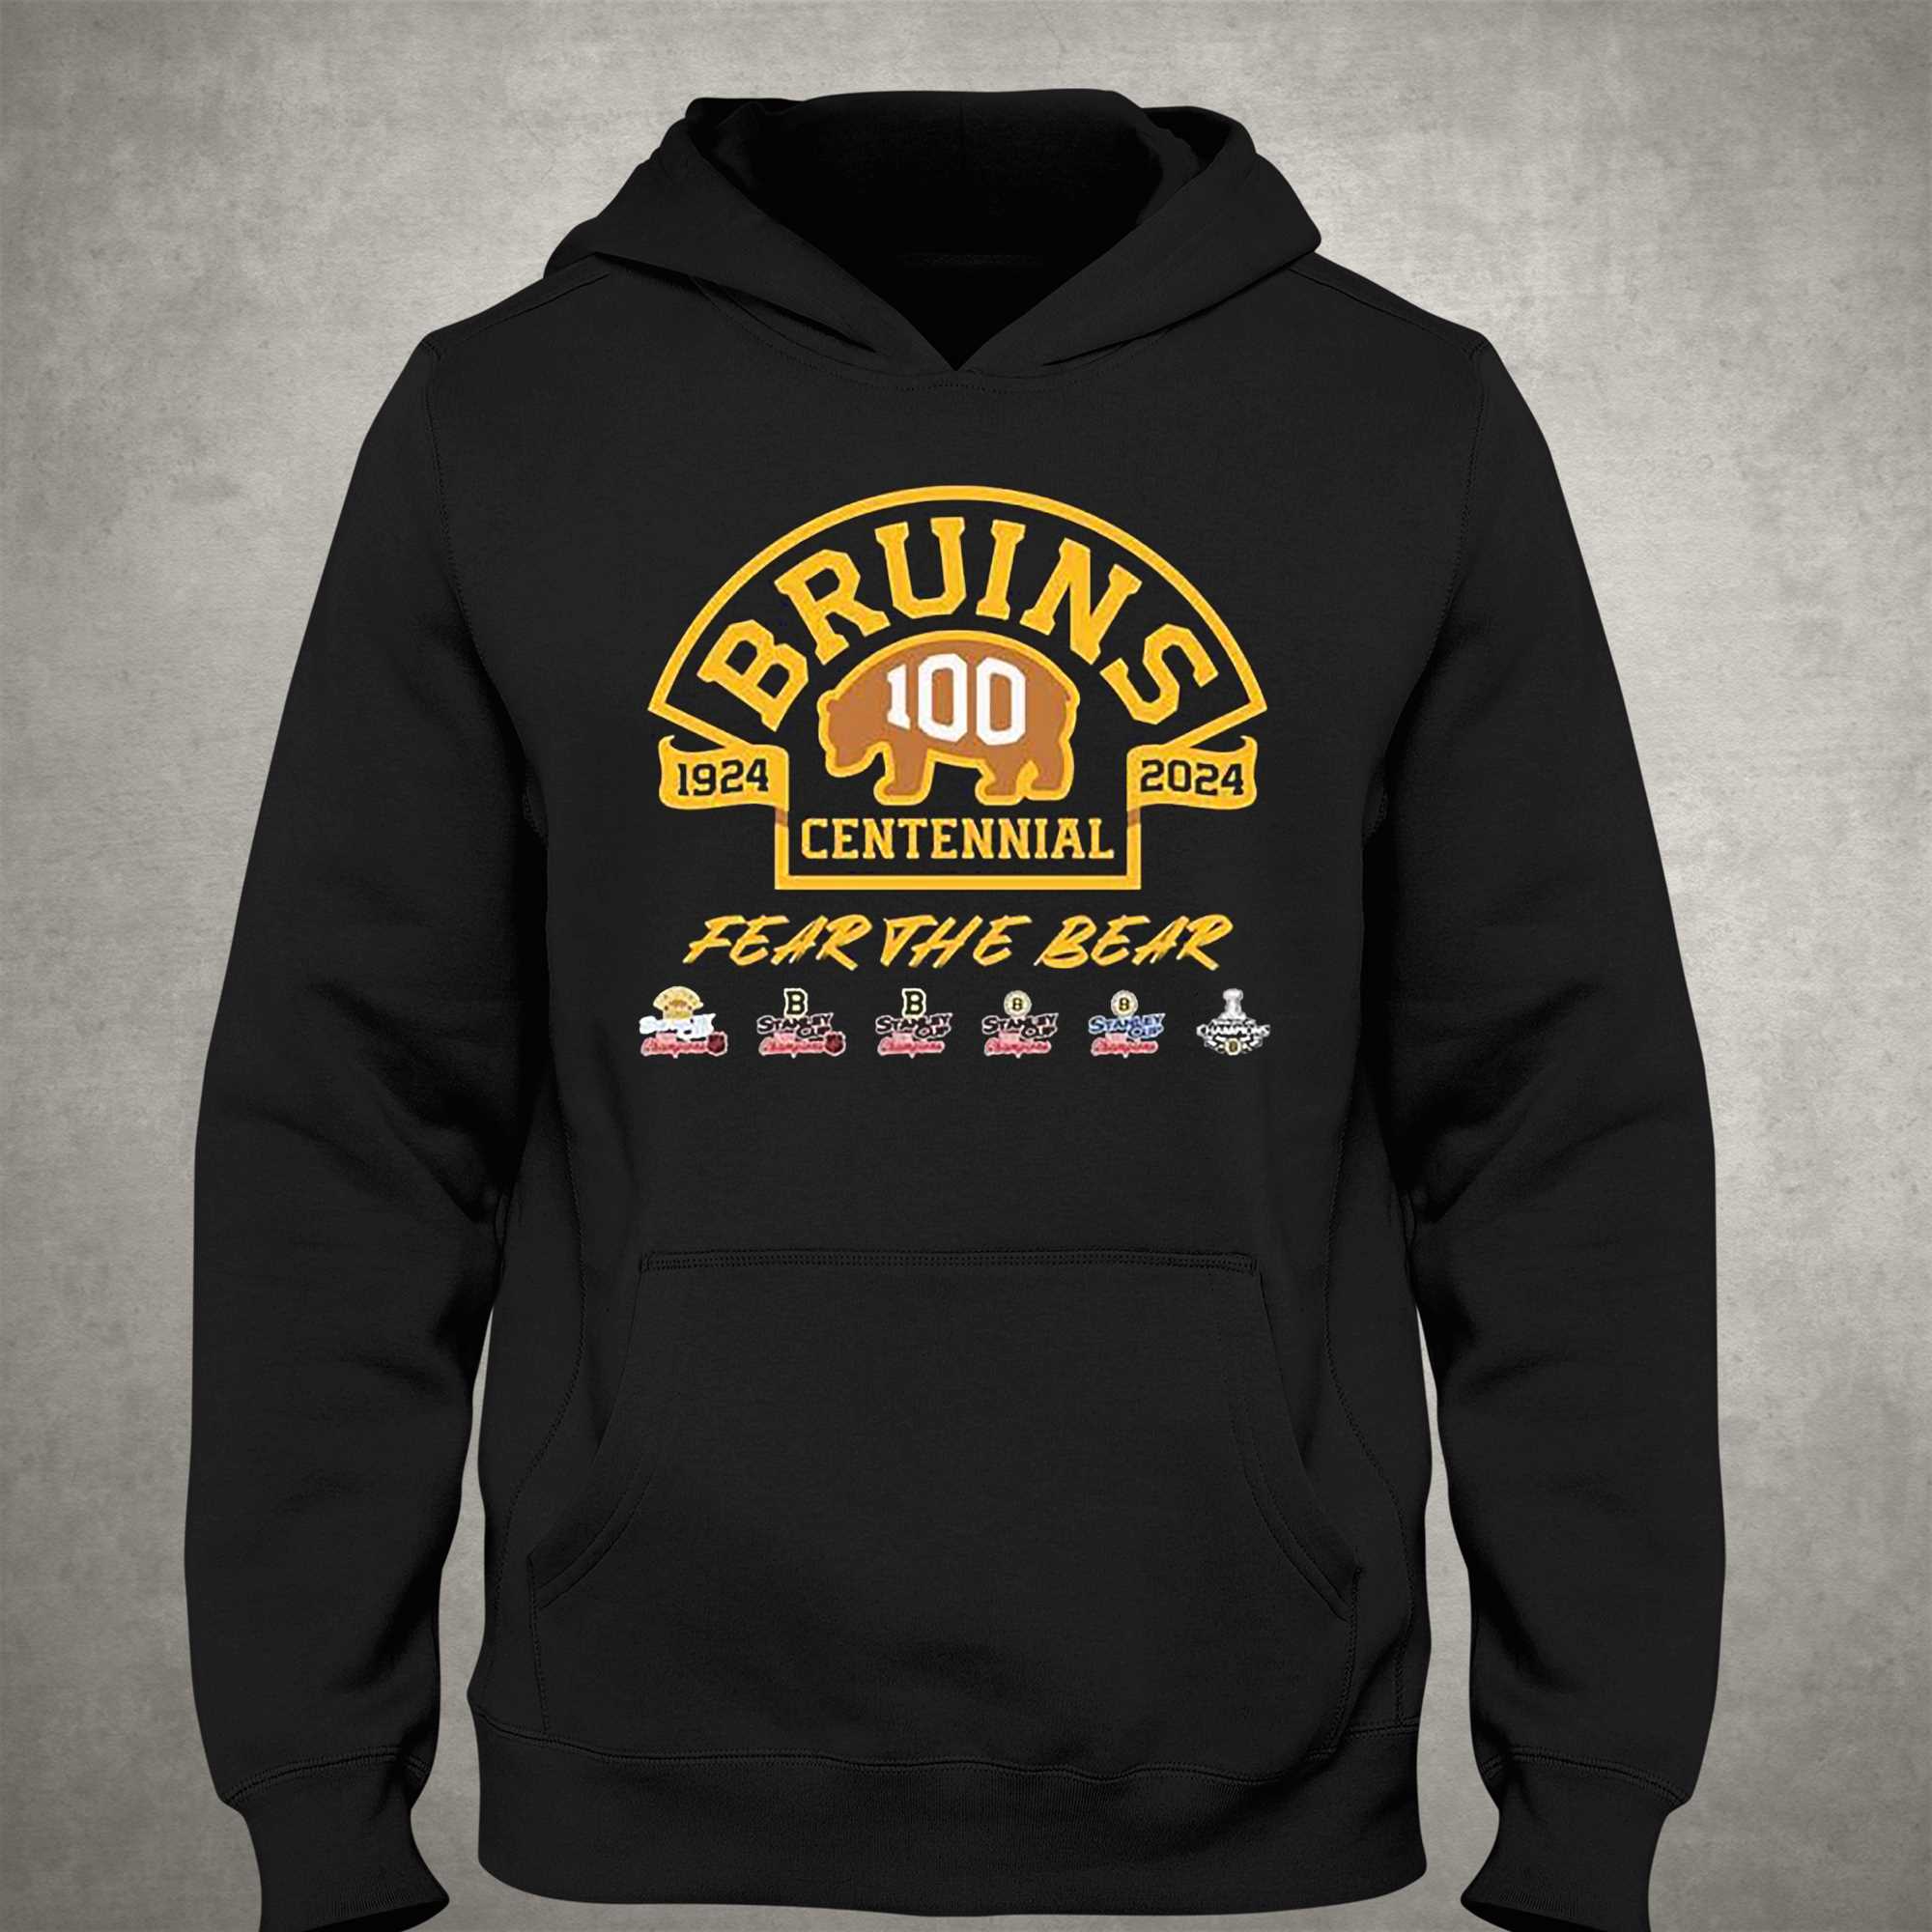 Boston Bruins Apparel, Bruins 100th Anniversary Gear, Boston